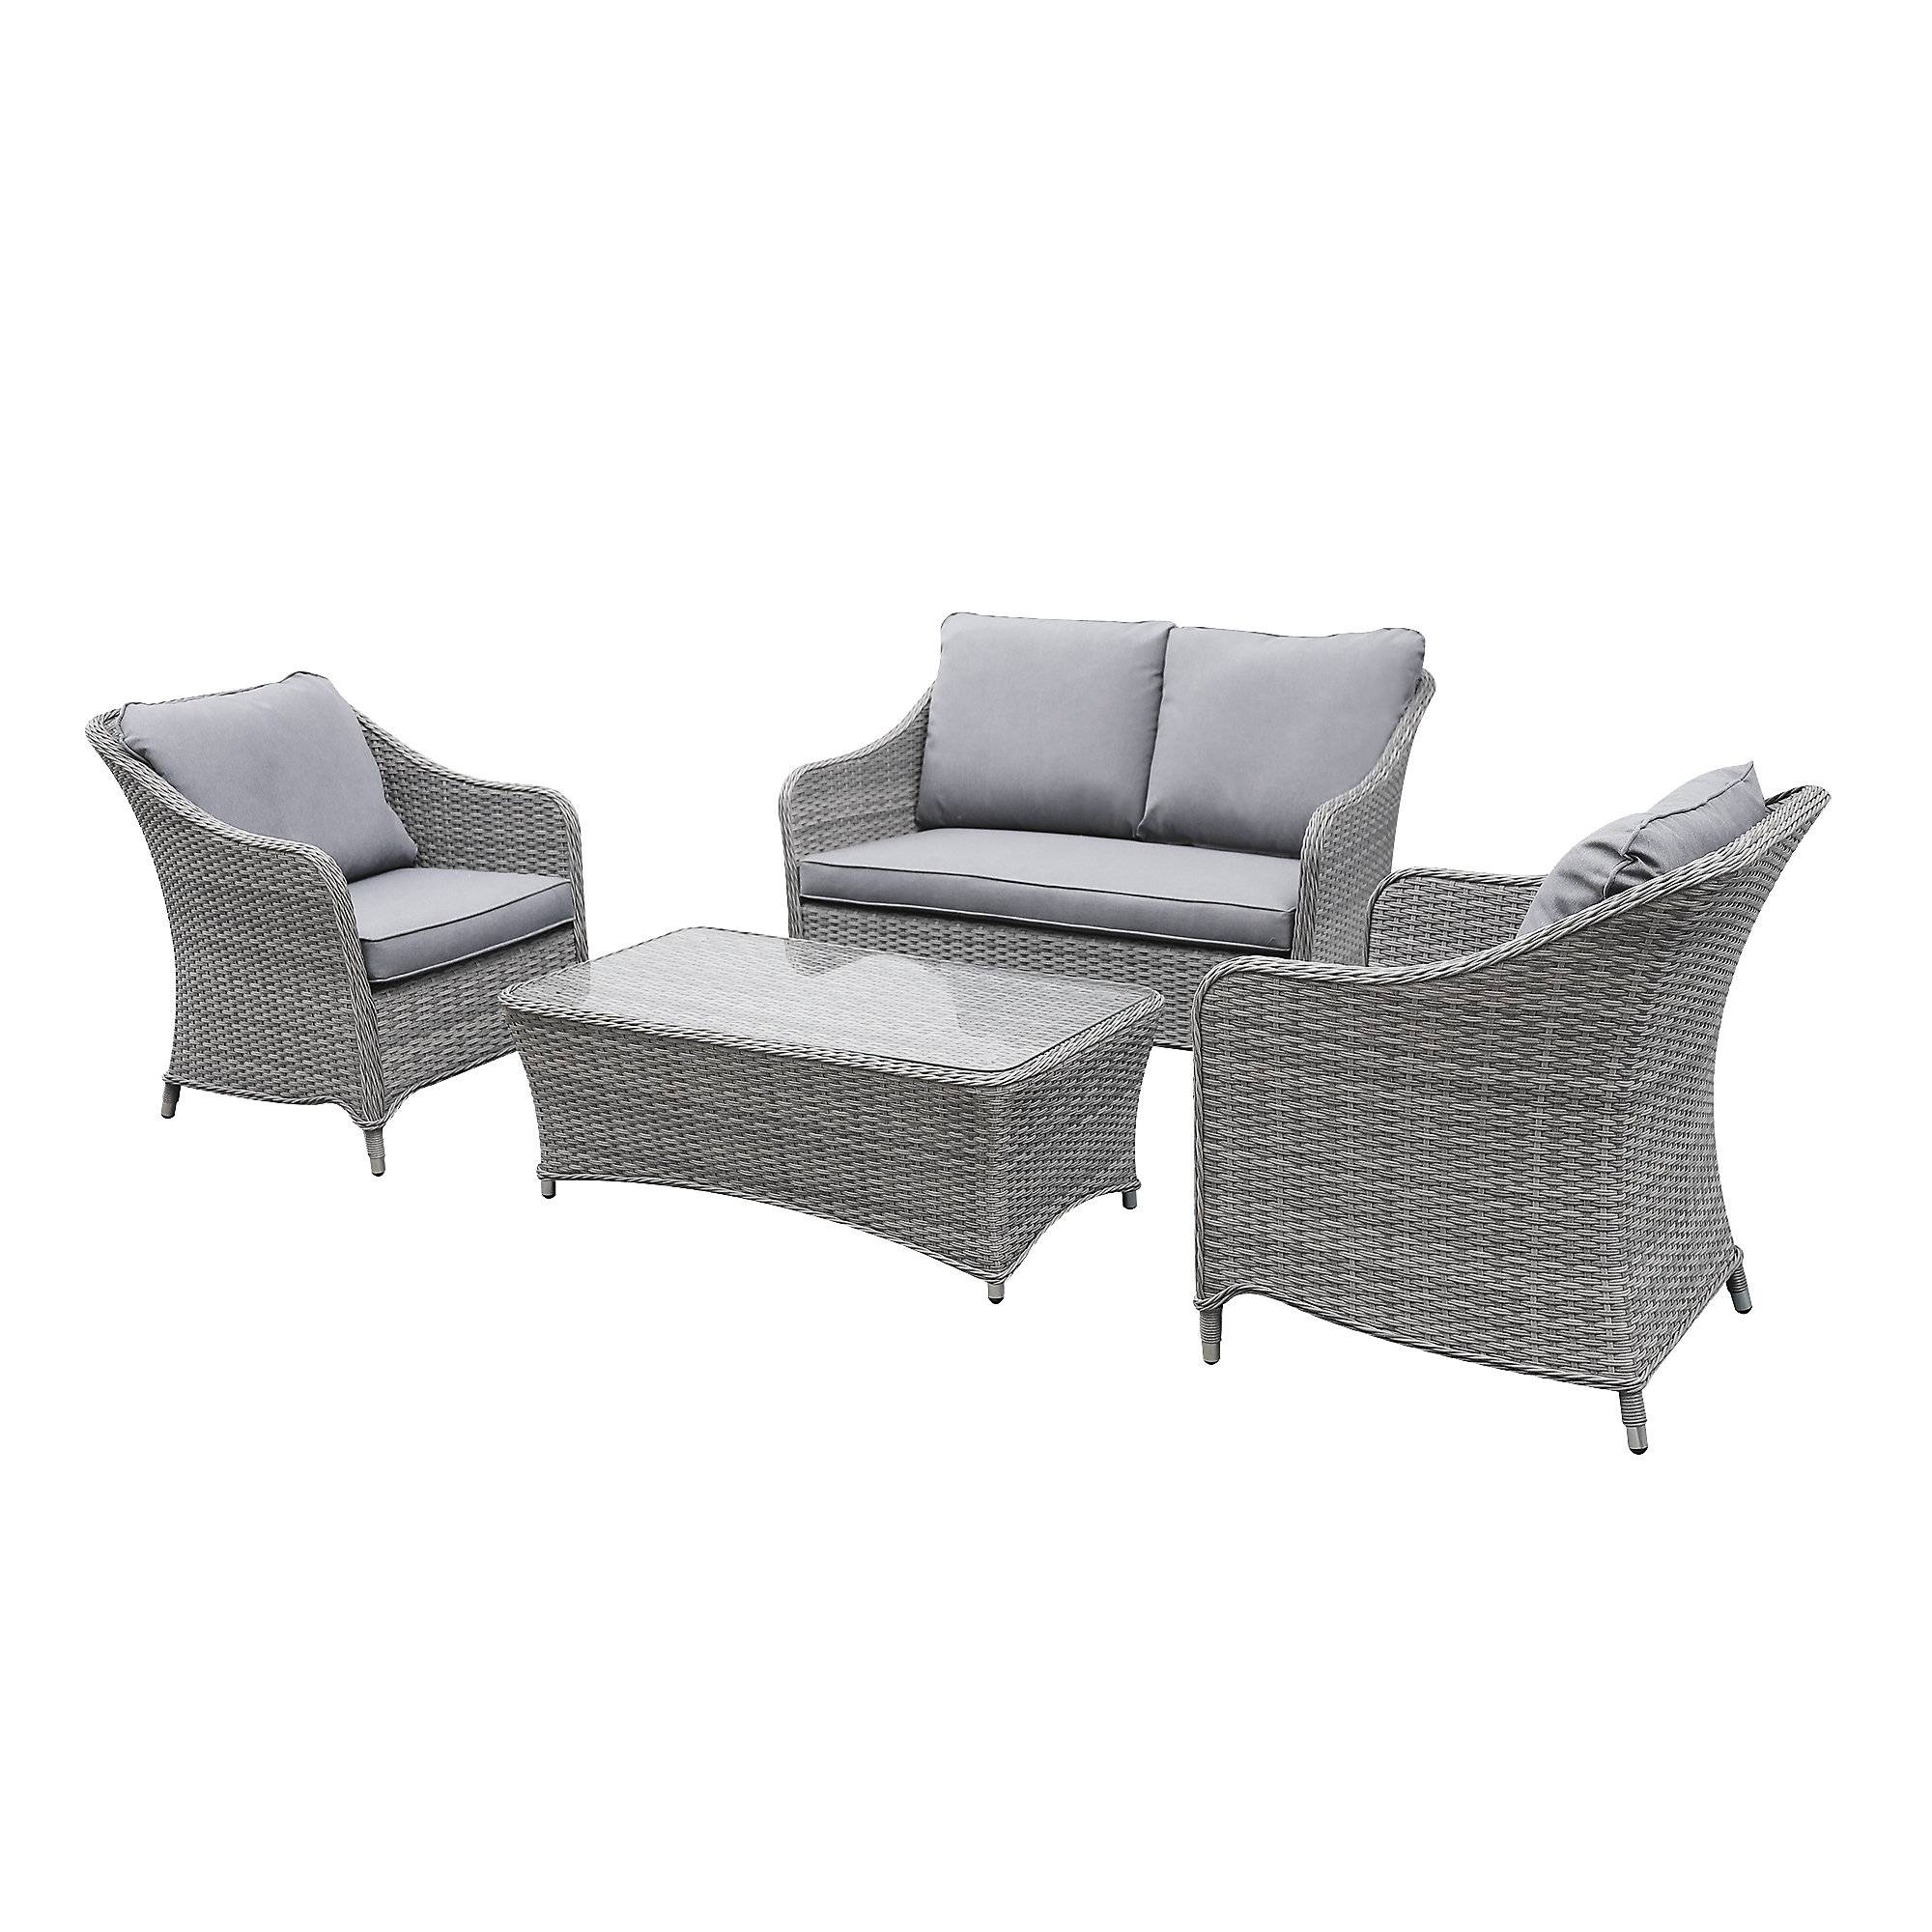 GoodHome Hamilton Steeple grey Rattan effect 4 Seater Coffee set - Rattan Furniture 1625- 4125 - 9393